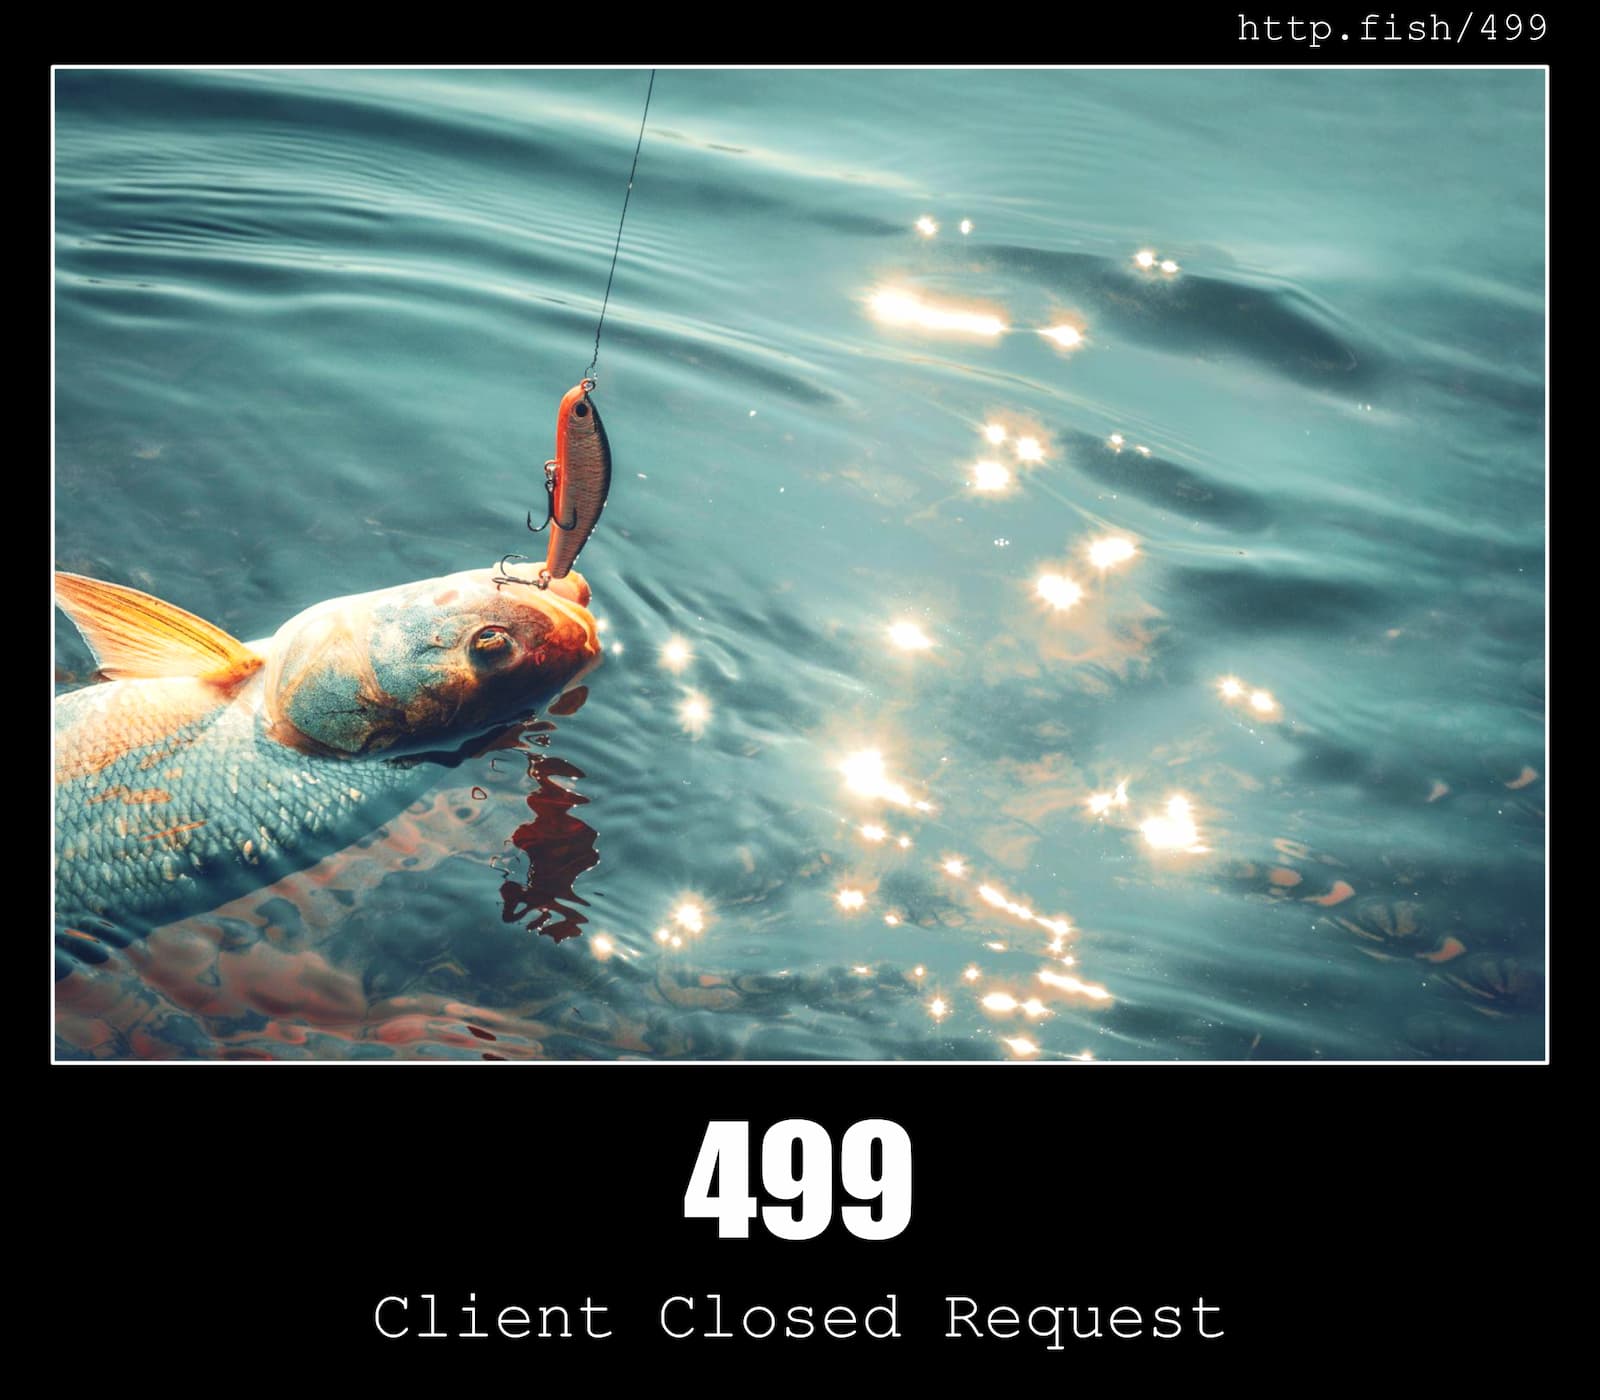 HTTP Status Code 499 Client Closed Request & Fish